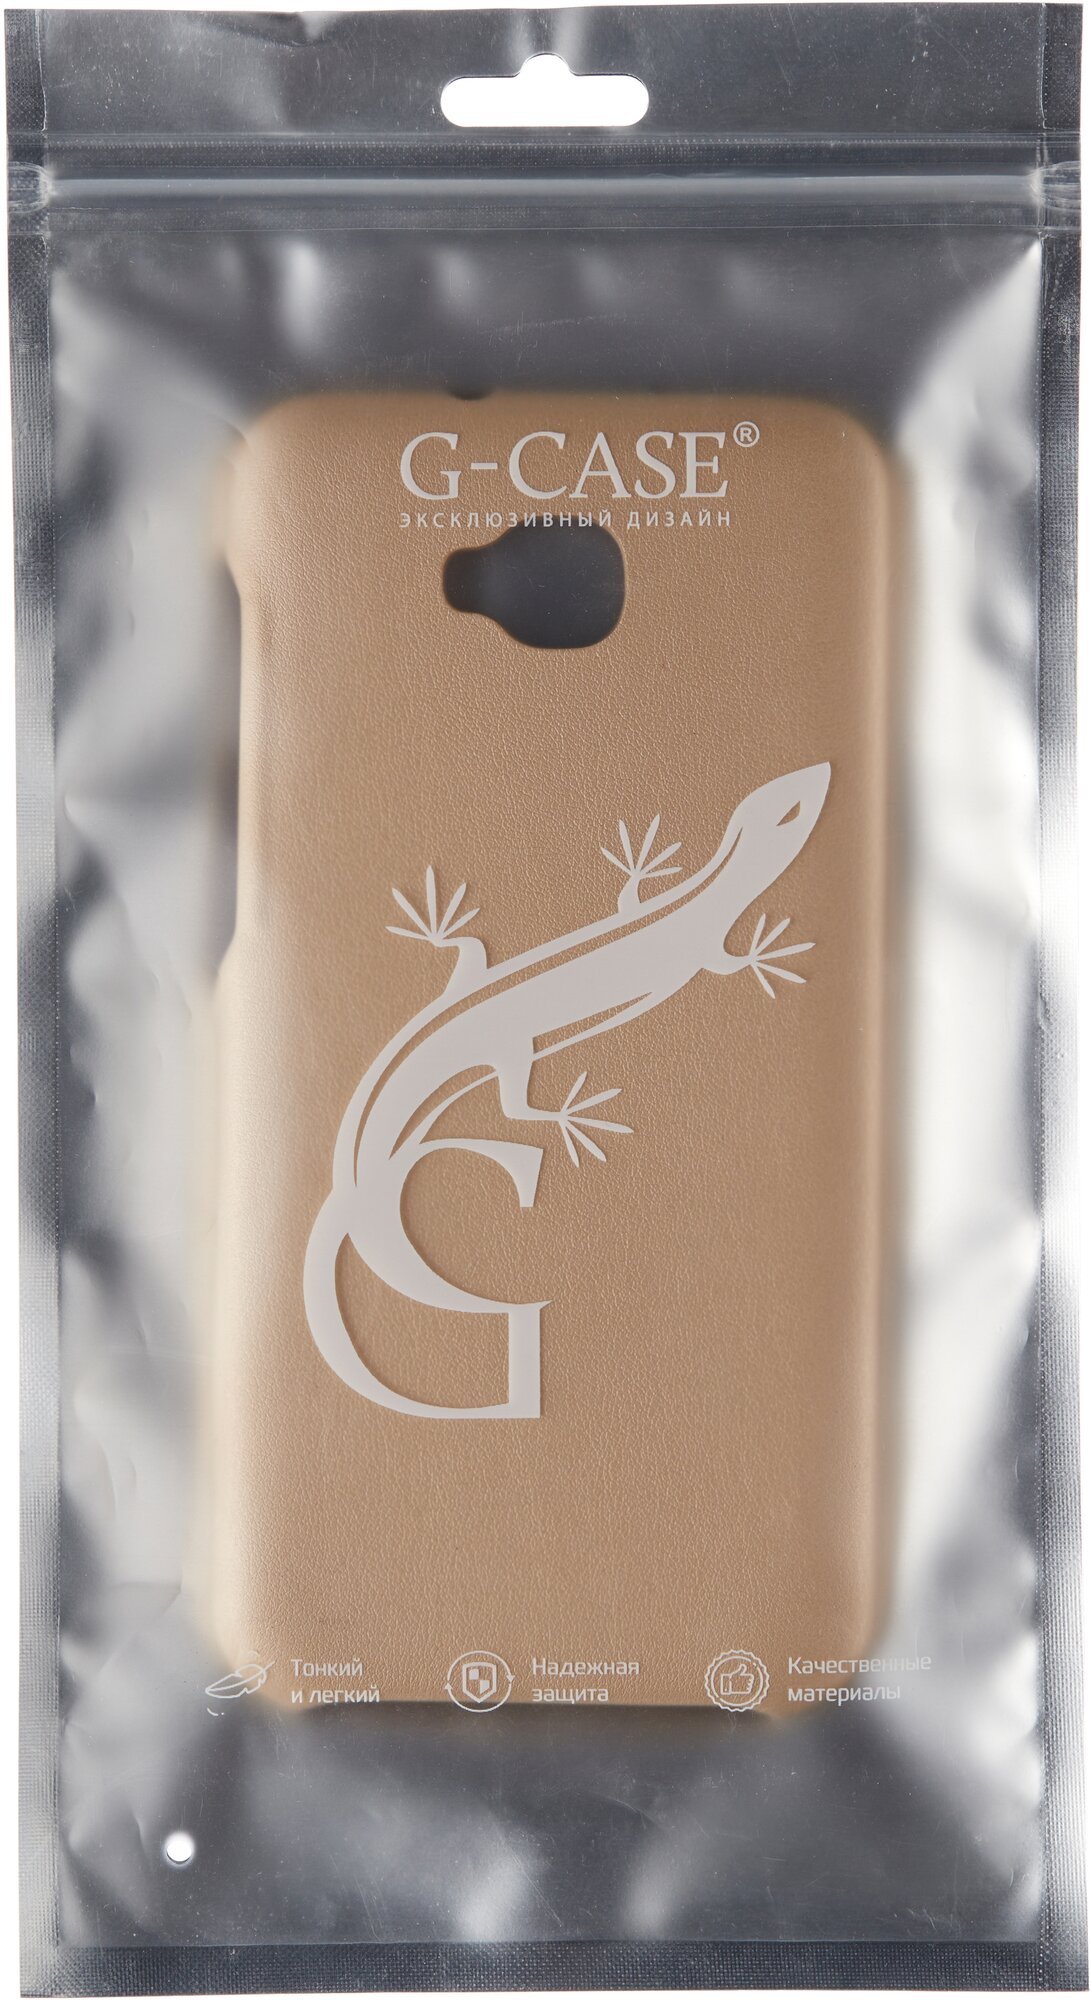 G-case G-Case - фото №3